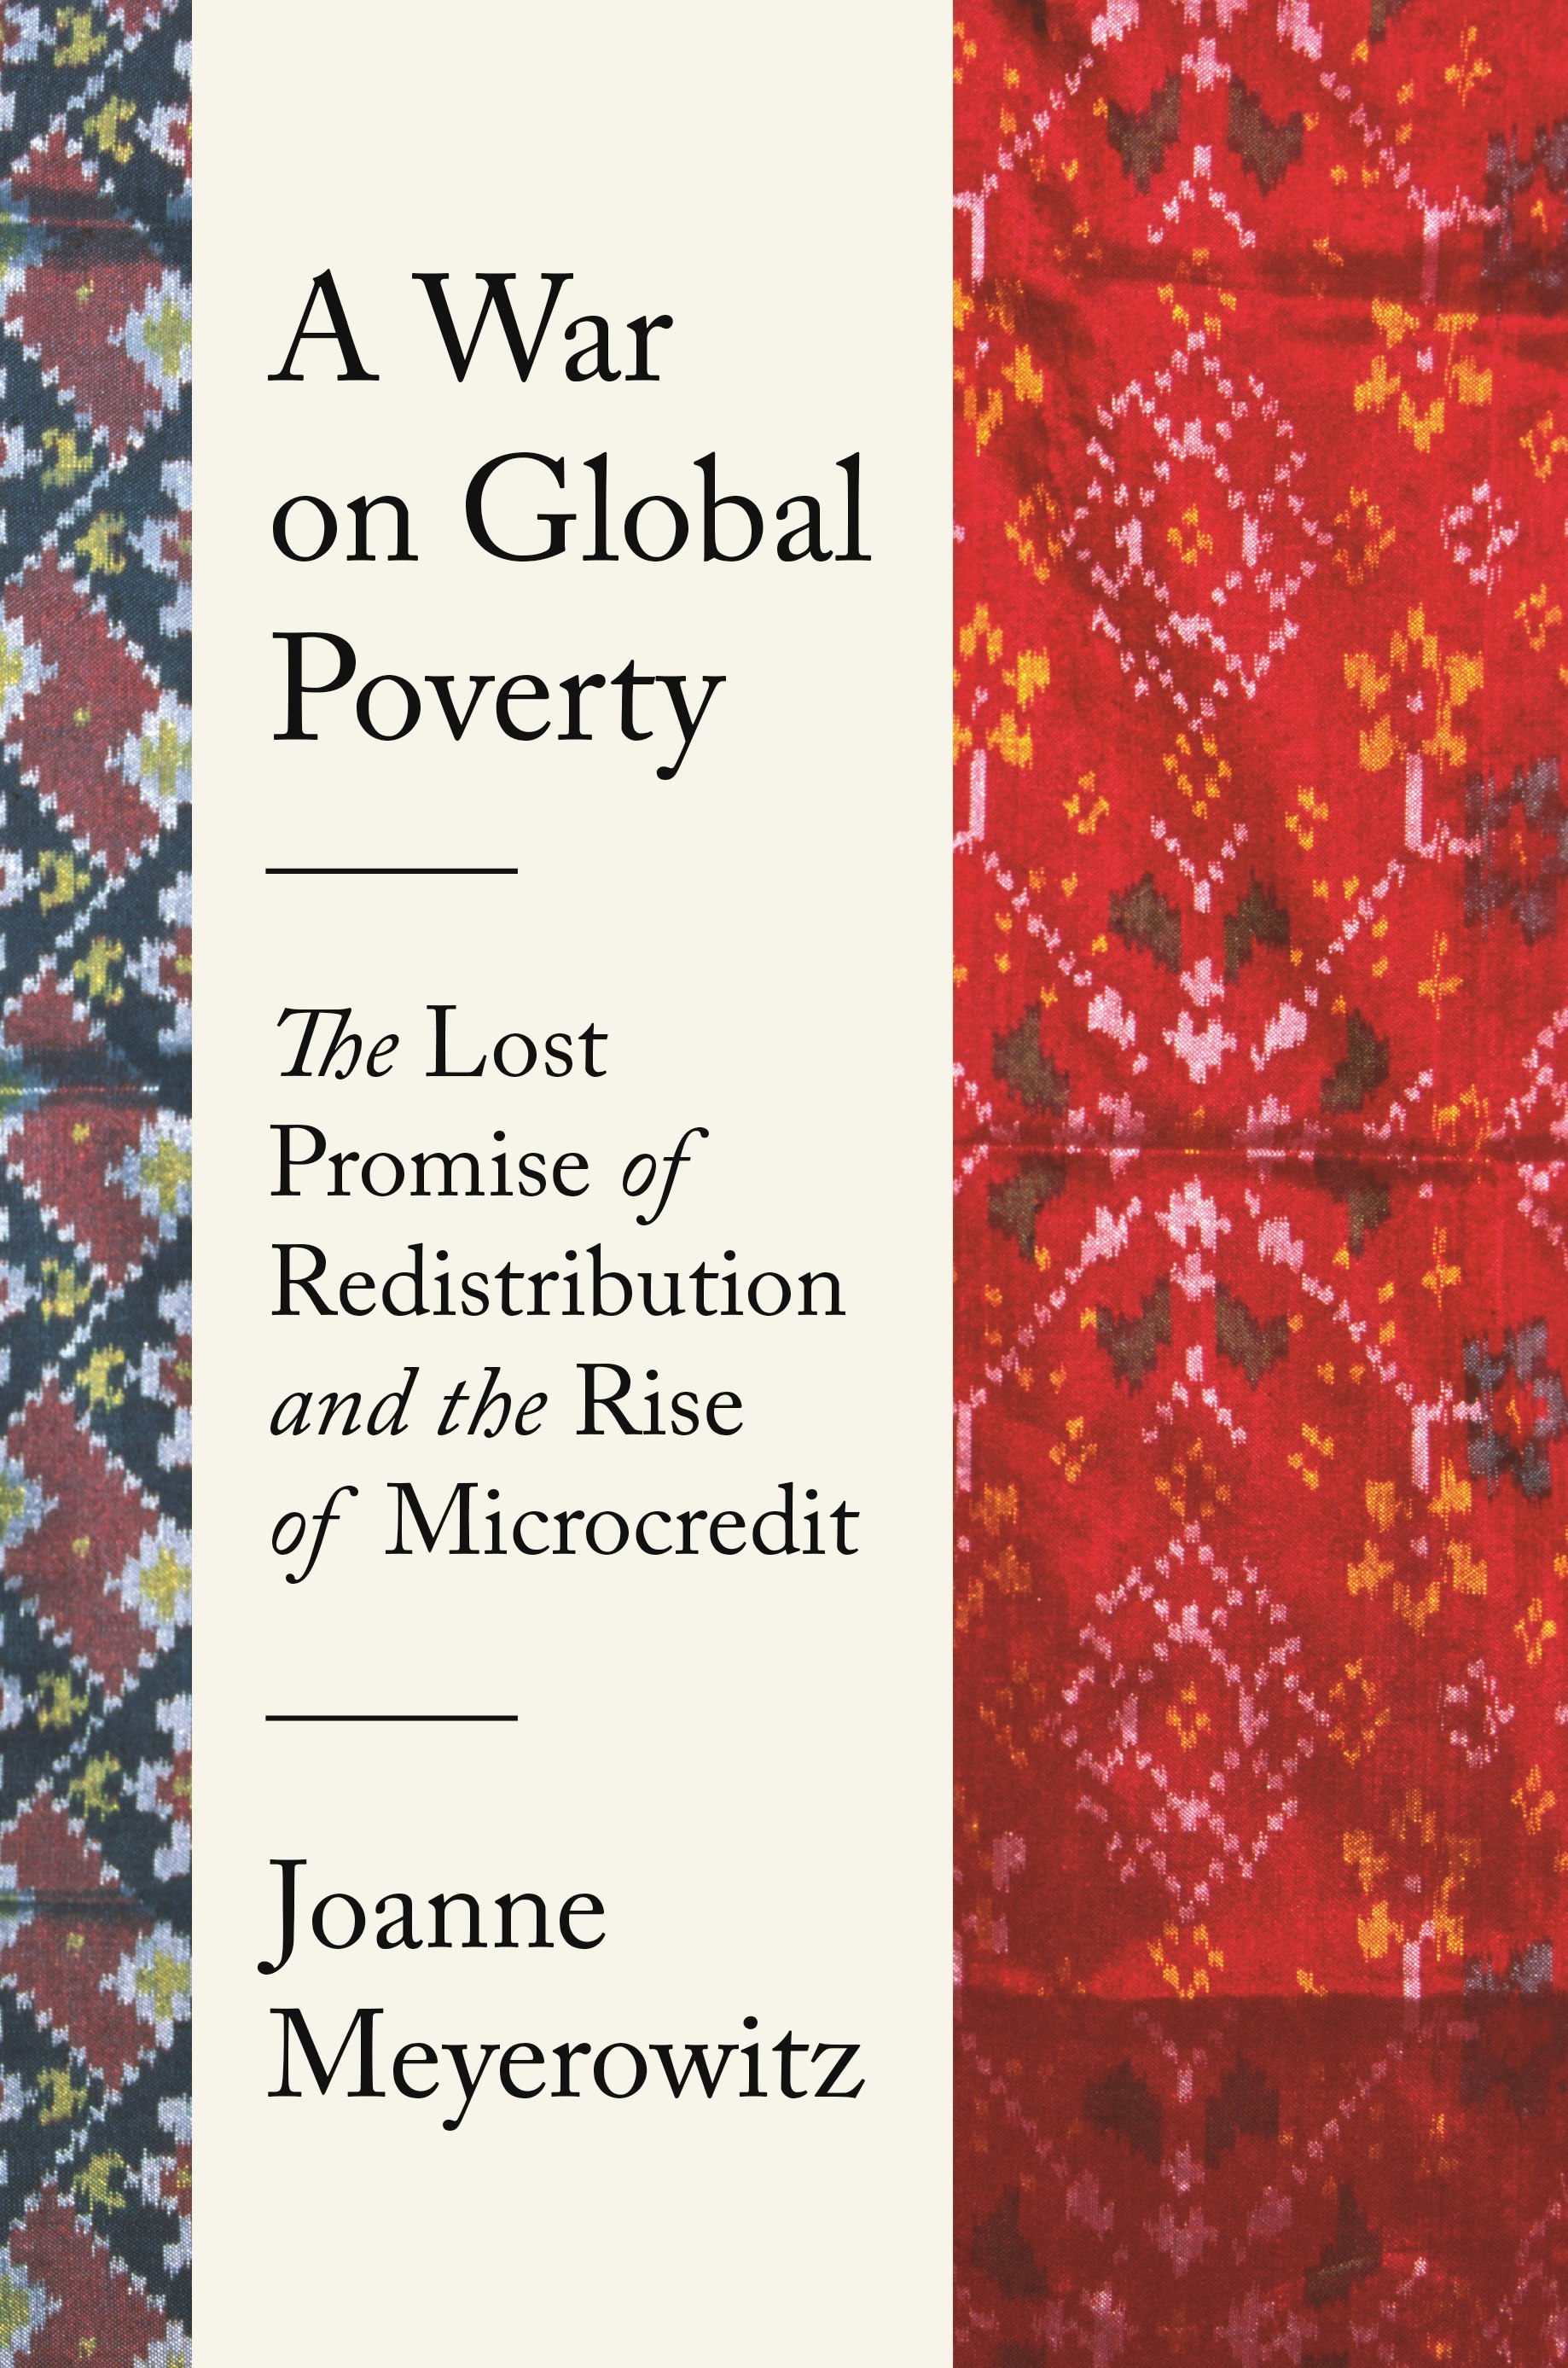 Poverty　University　A　Press　War　on　Global　Princeton